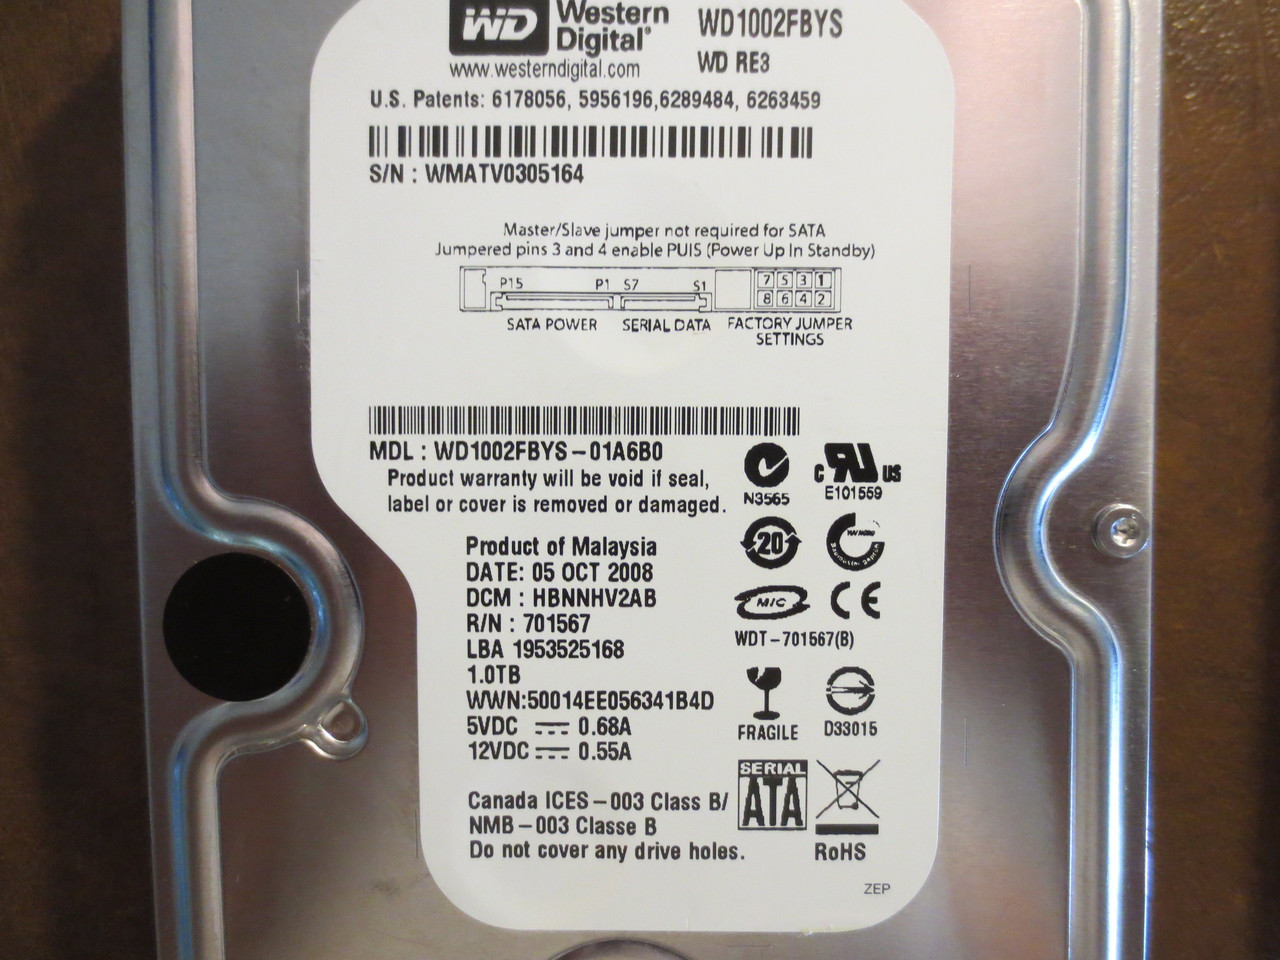 Western Digital WD1002FBYS-02A6B0 DCM:HARNHT2AB 1000gb 3.5" Sata hard drive